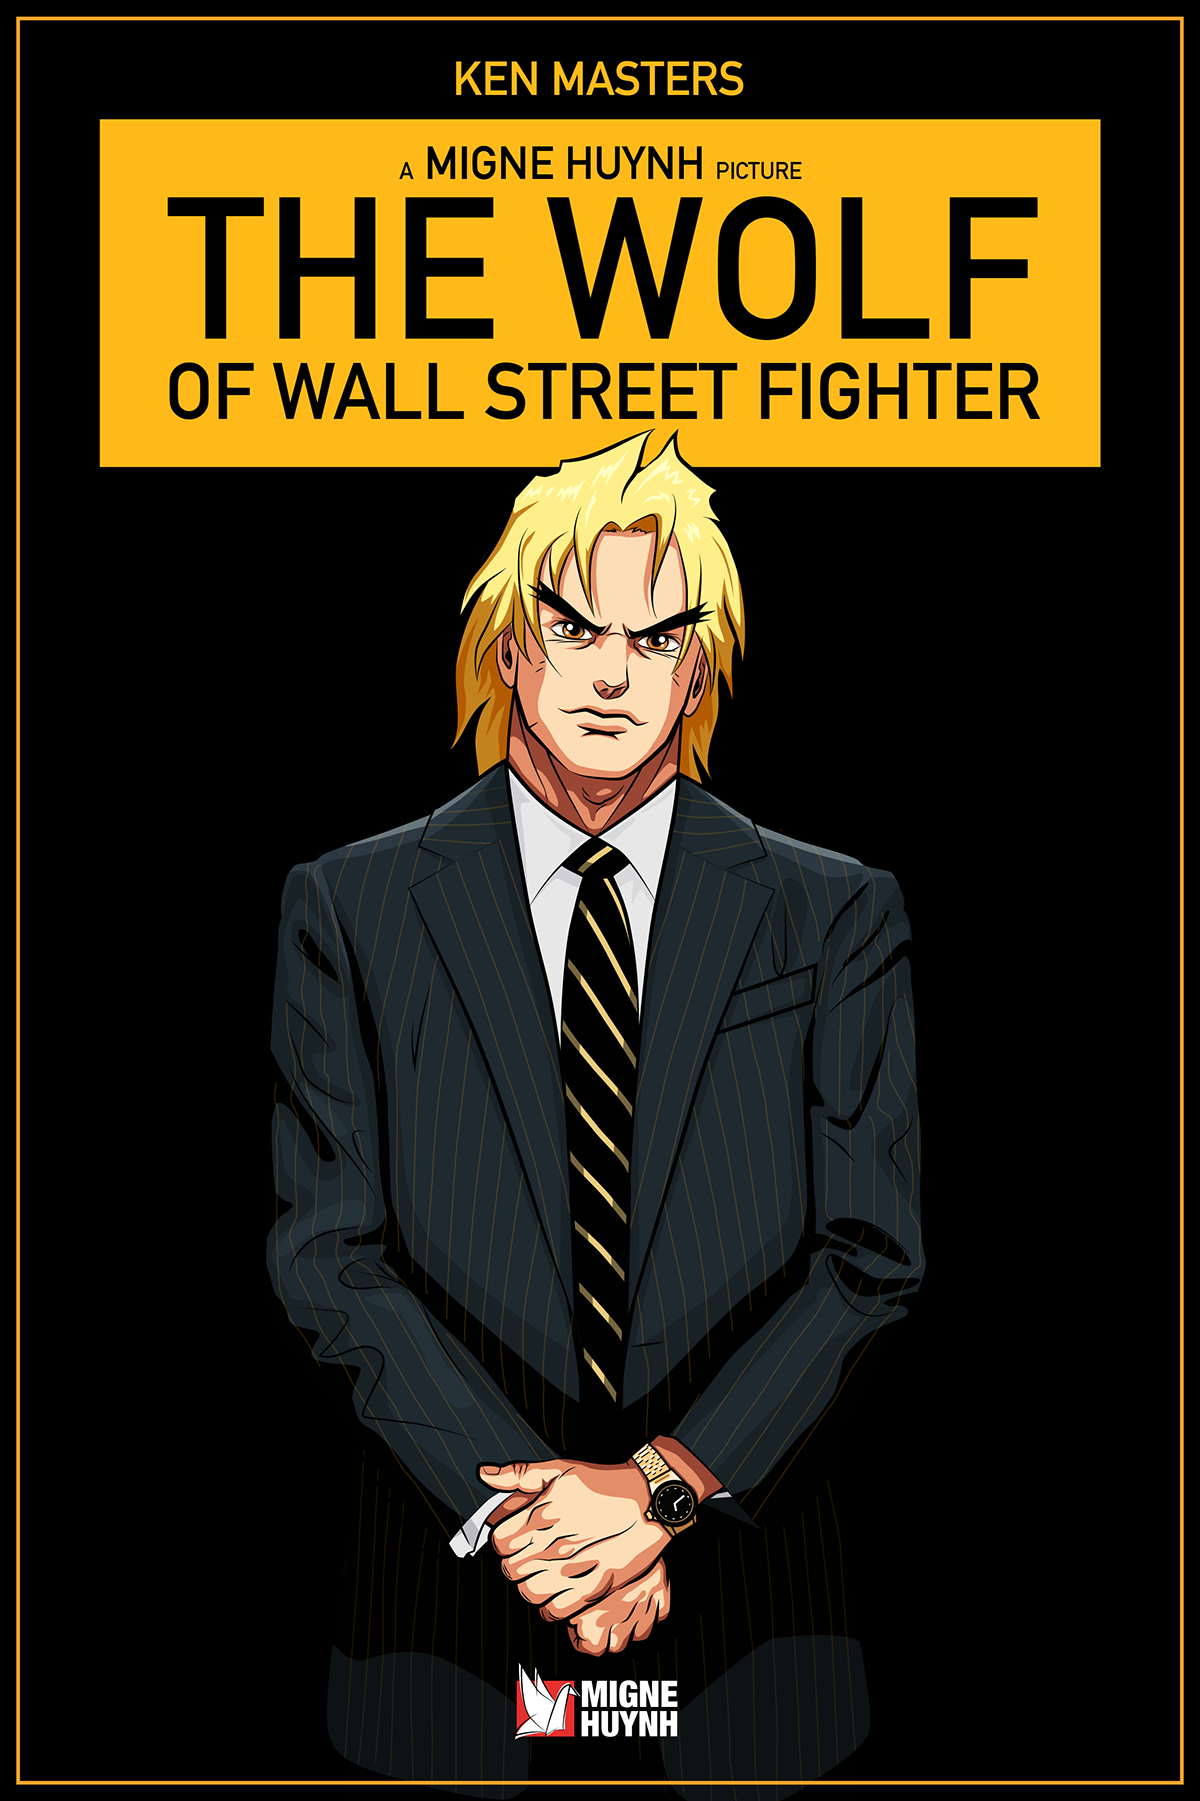 STREET FIGHTER game Gaming Street Wall street wolf dicaprio Ken Masters geek vector movie fight Cinema Illustrator